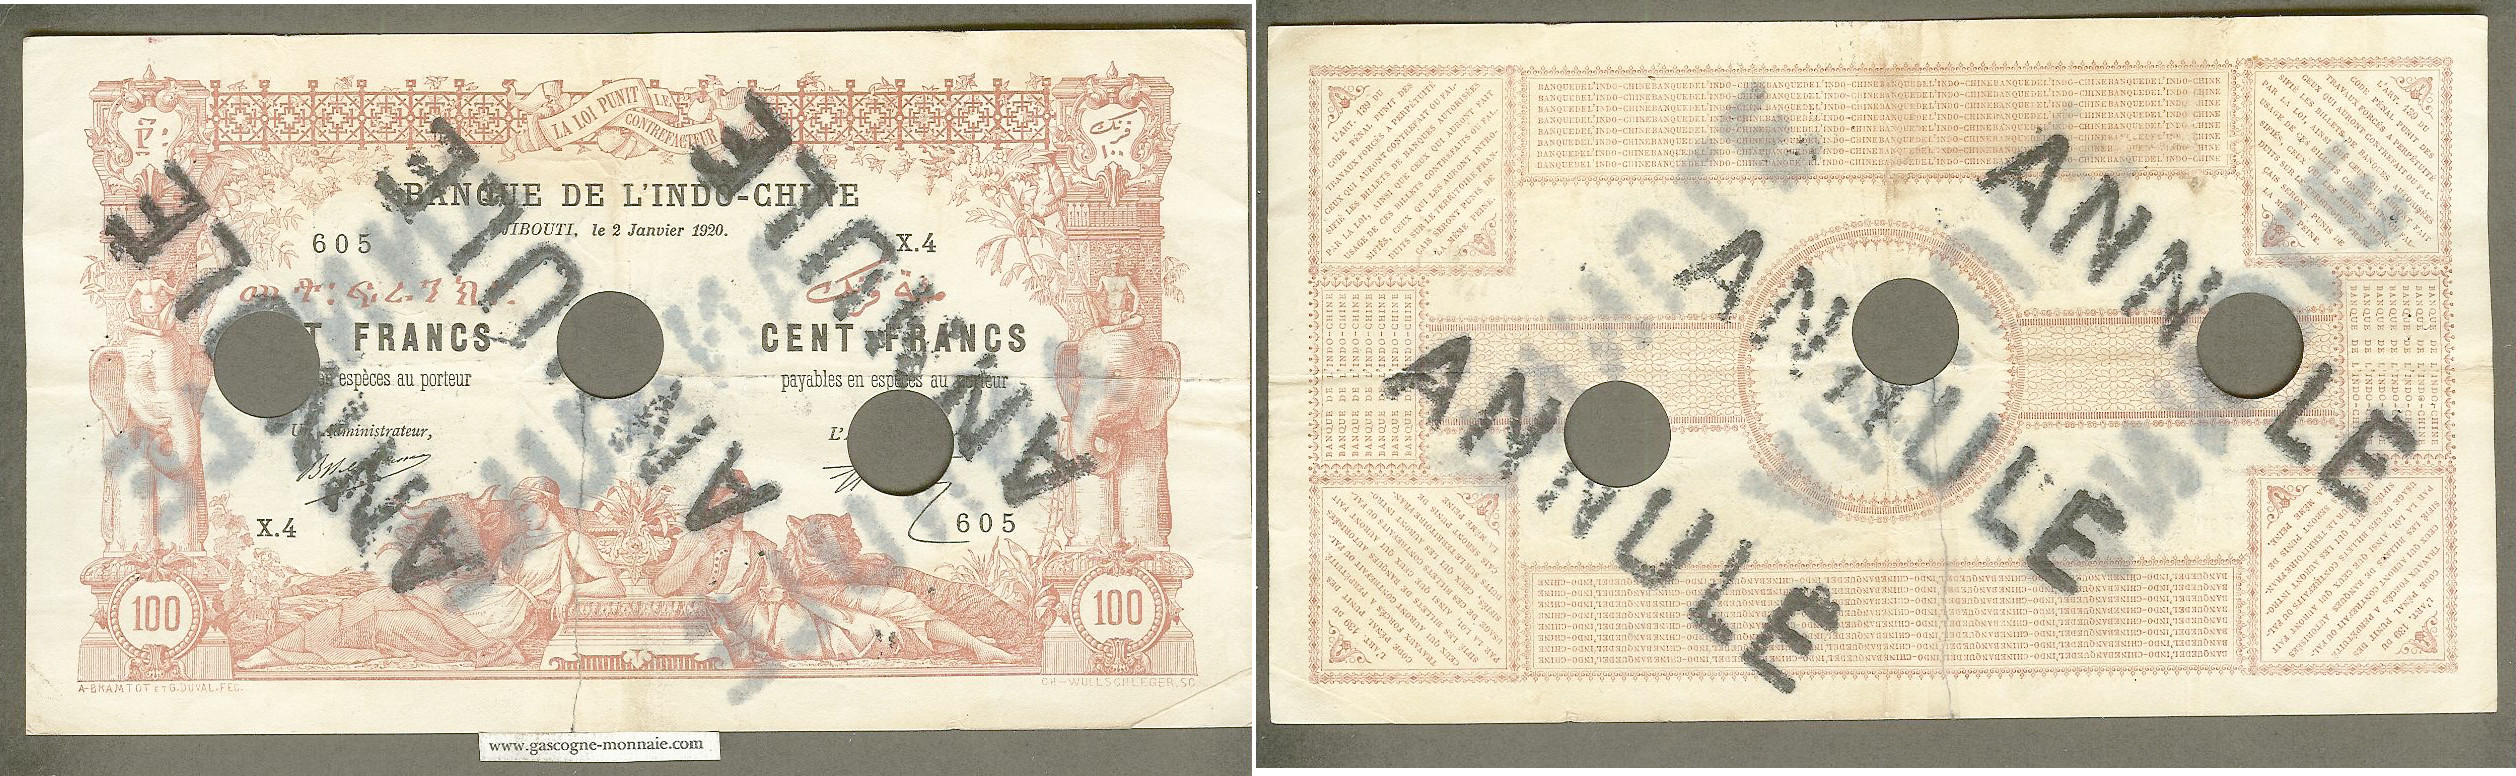 Djibouti Bank of Indochina 100 francs 2.1.1920 Cancelled aVF